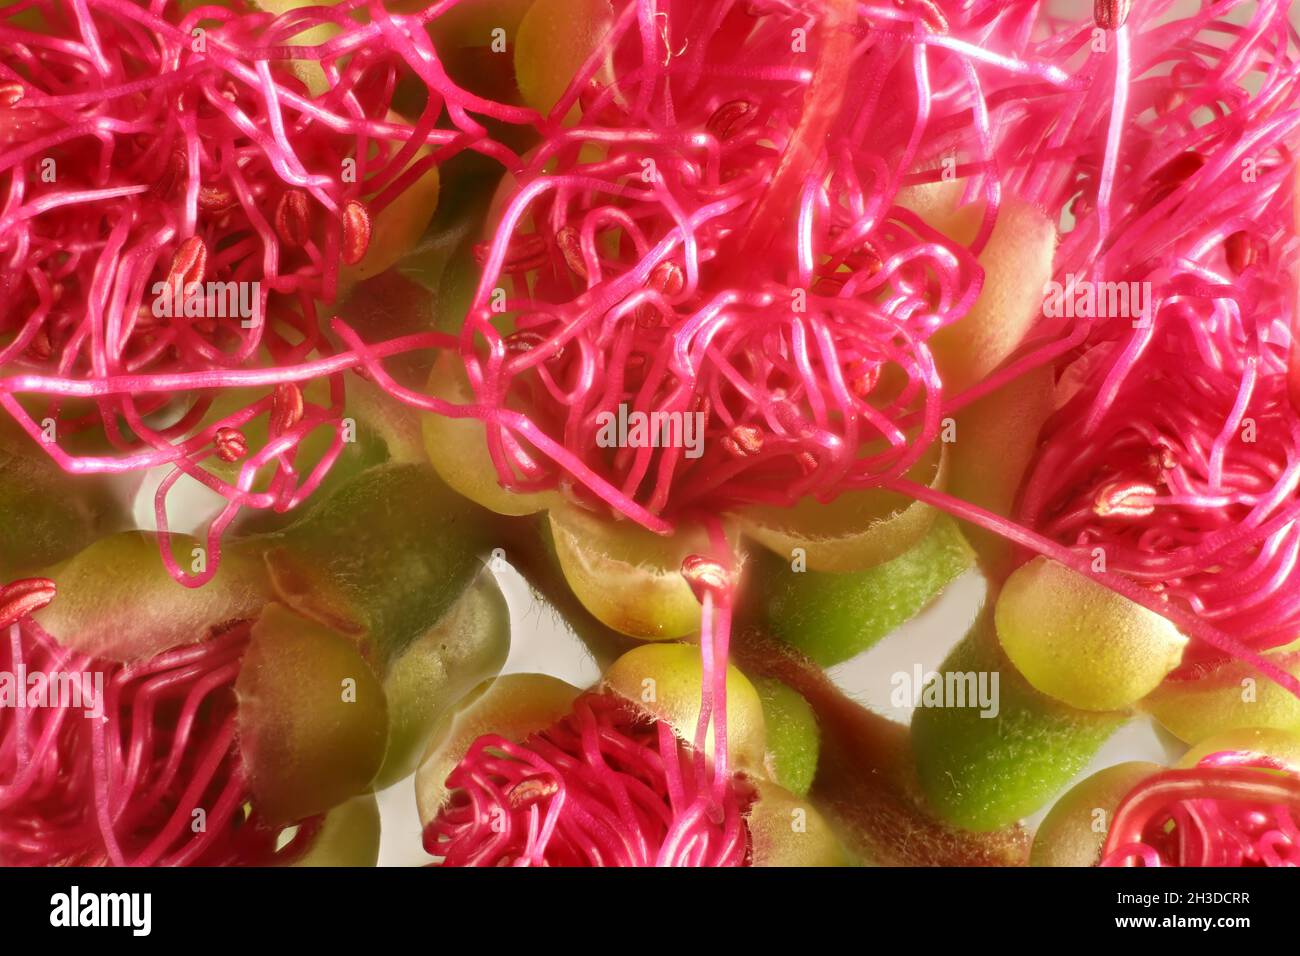 Macro view of flowers emerging from inflorescence of pink bottlebrush (Callistemon) tree Stock Photo